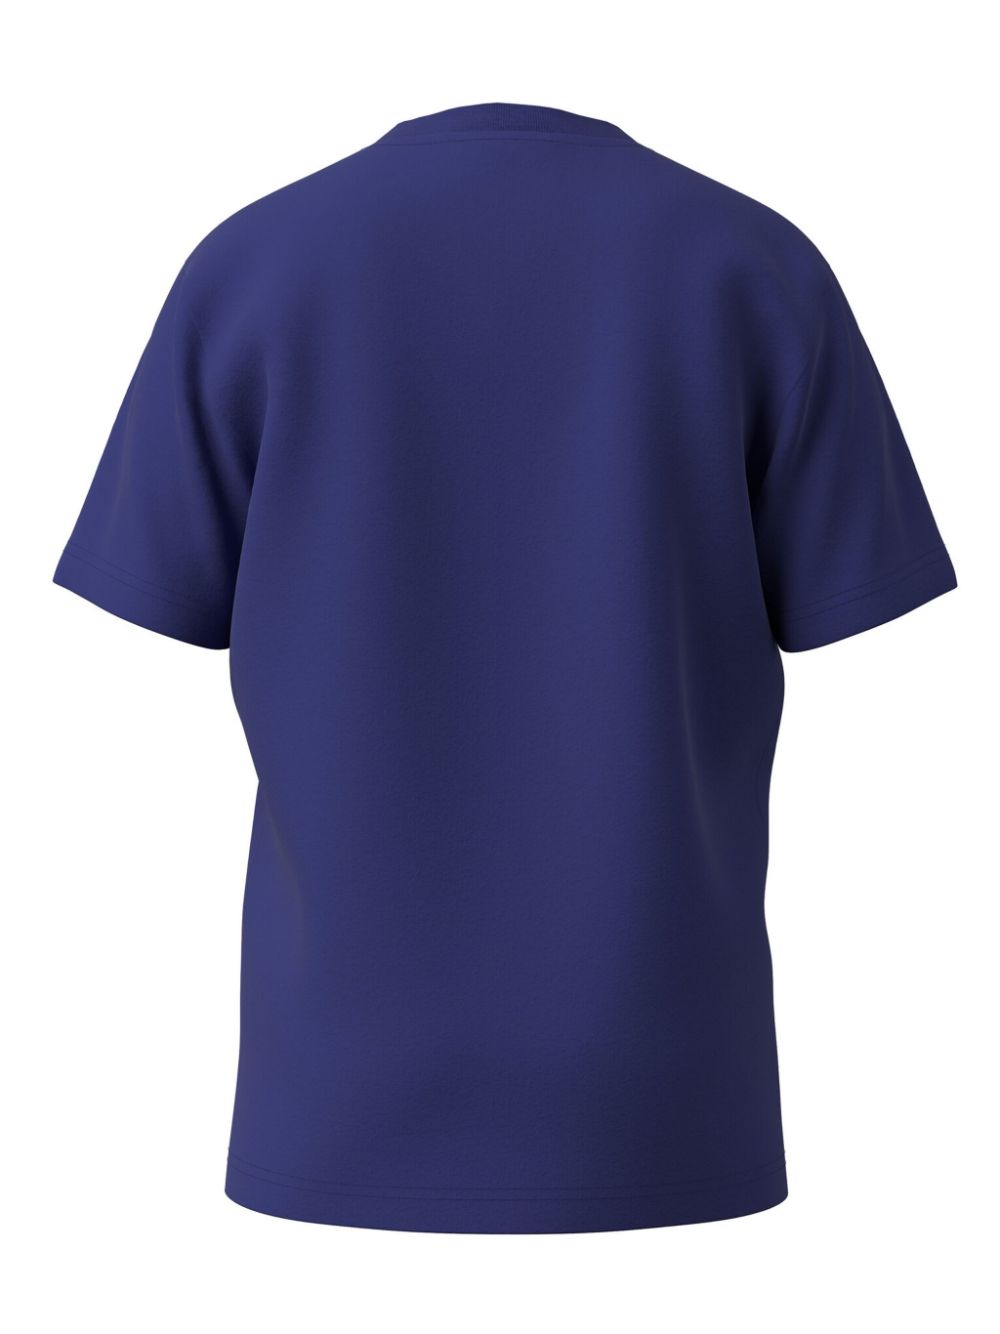 T-shirt blu per bambino con logo ICON